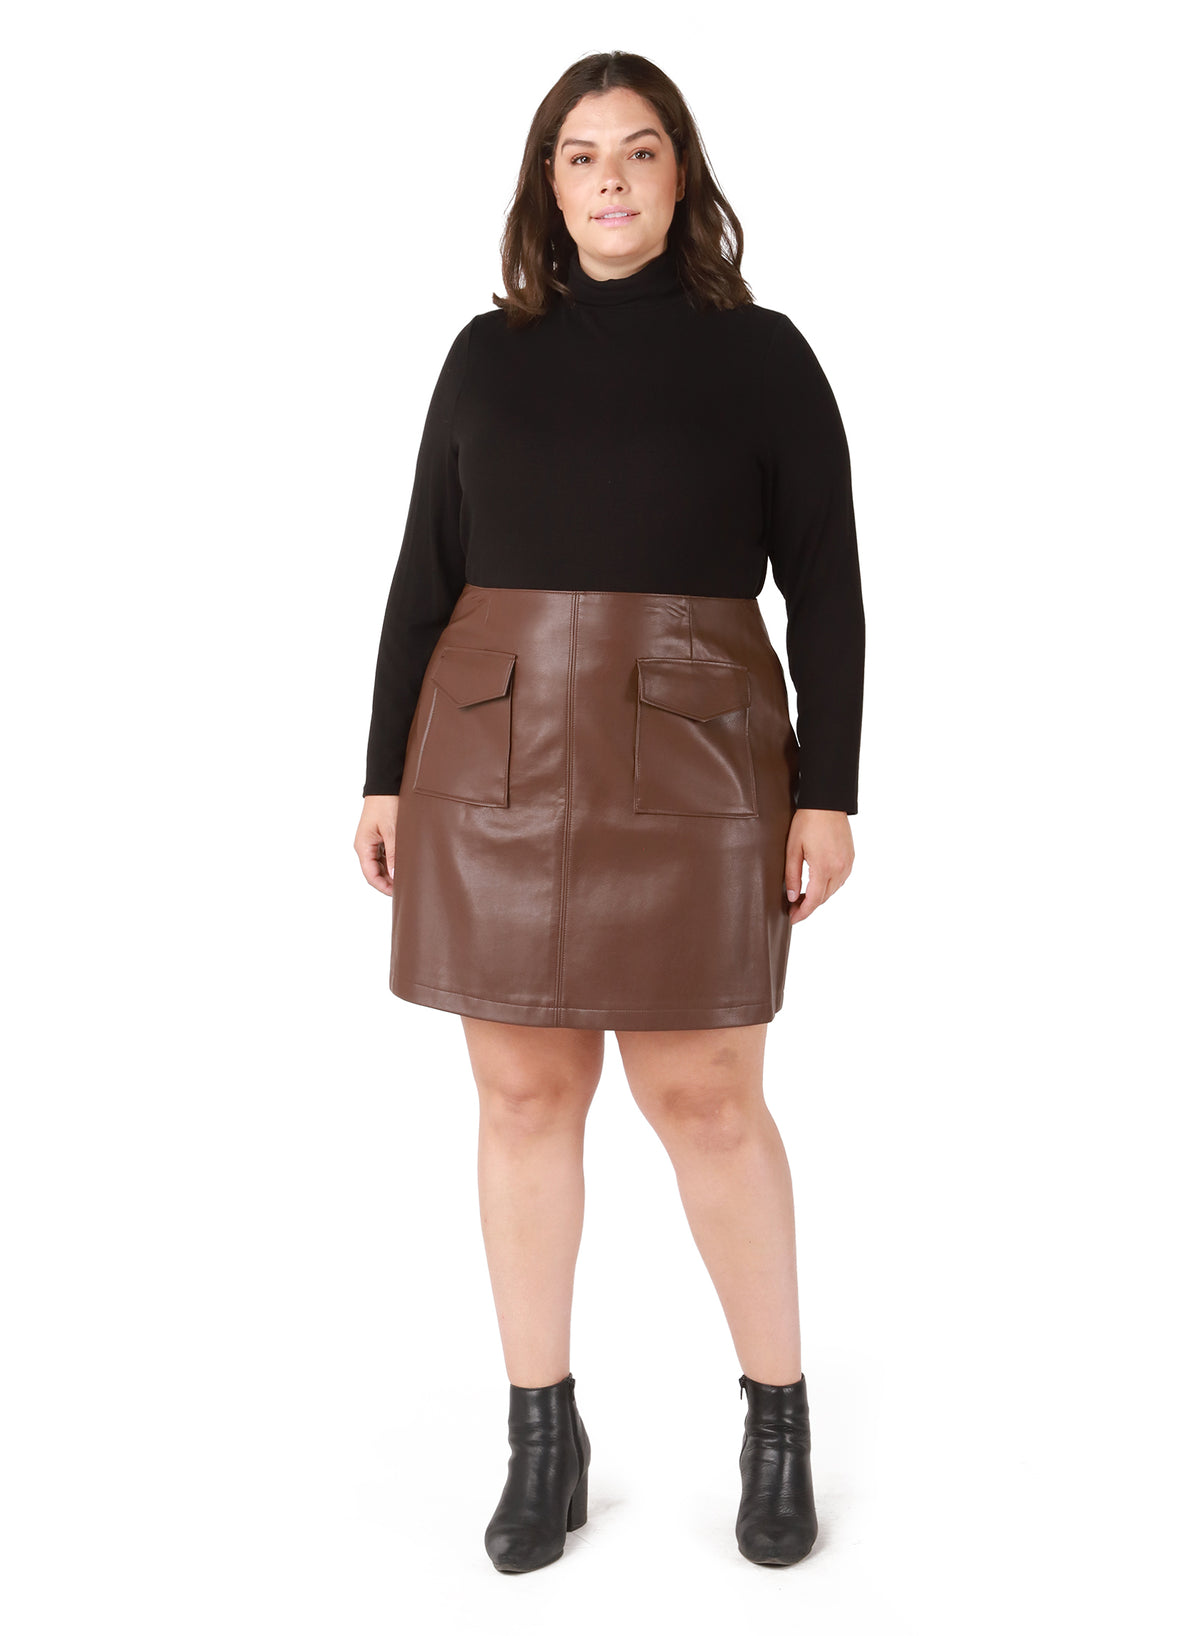 The Eden Faux Leather Mini Skirt